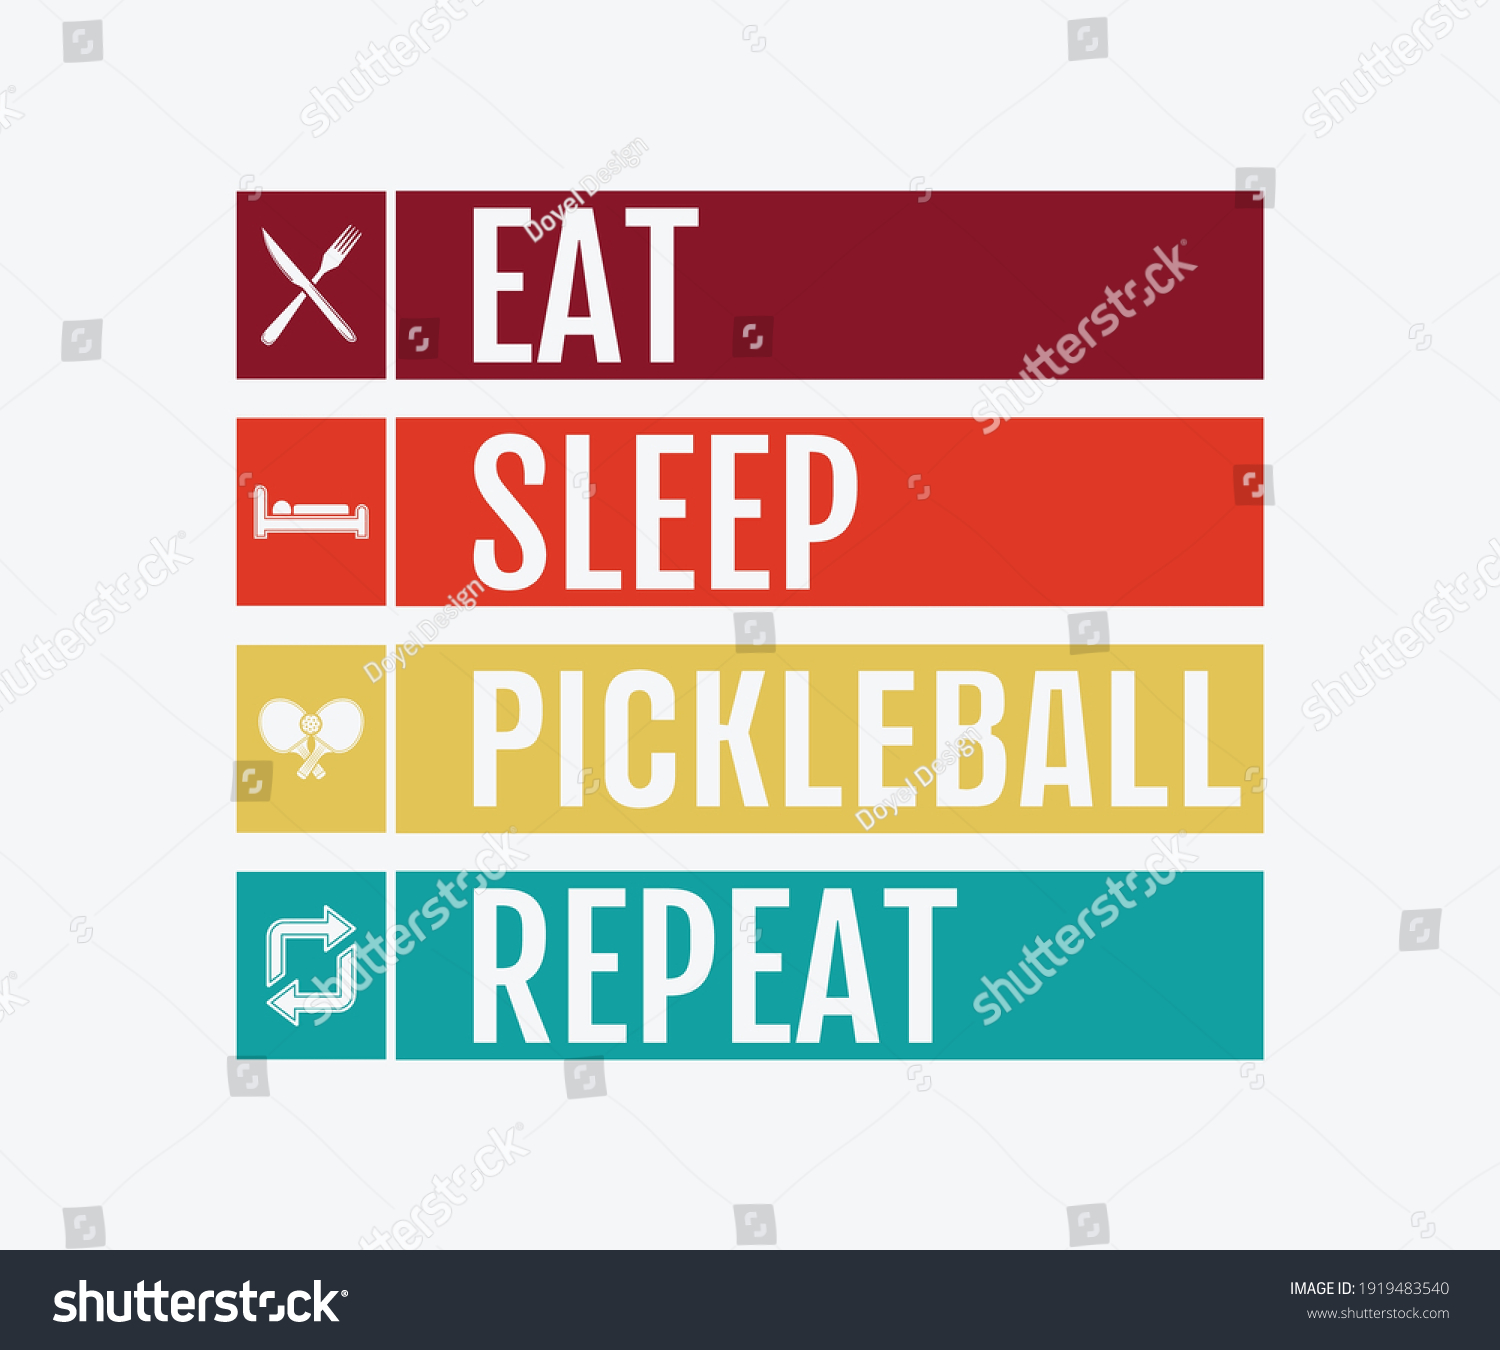 SVG of Eat sleep PickleBall repeat, Printable Vector Illustration. Pickleball SVG. Great for badge t-shirt and postcard designs. Vector graphic illustration. svg